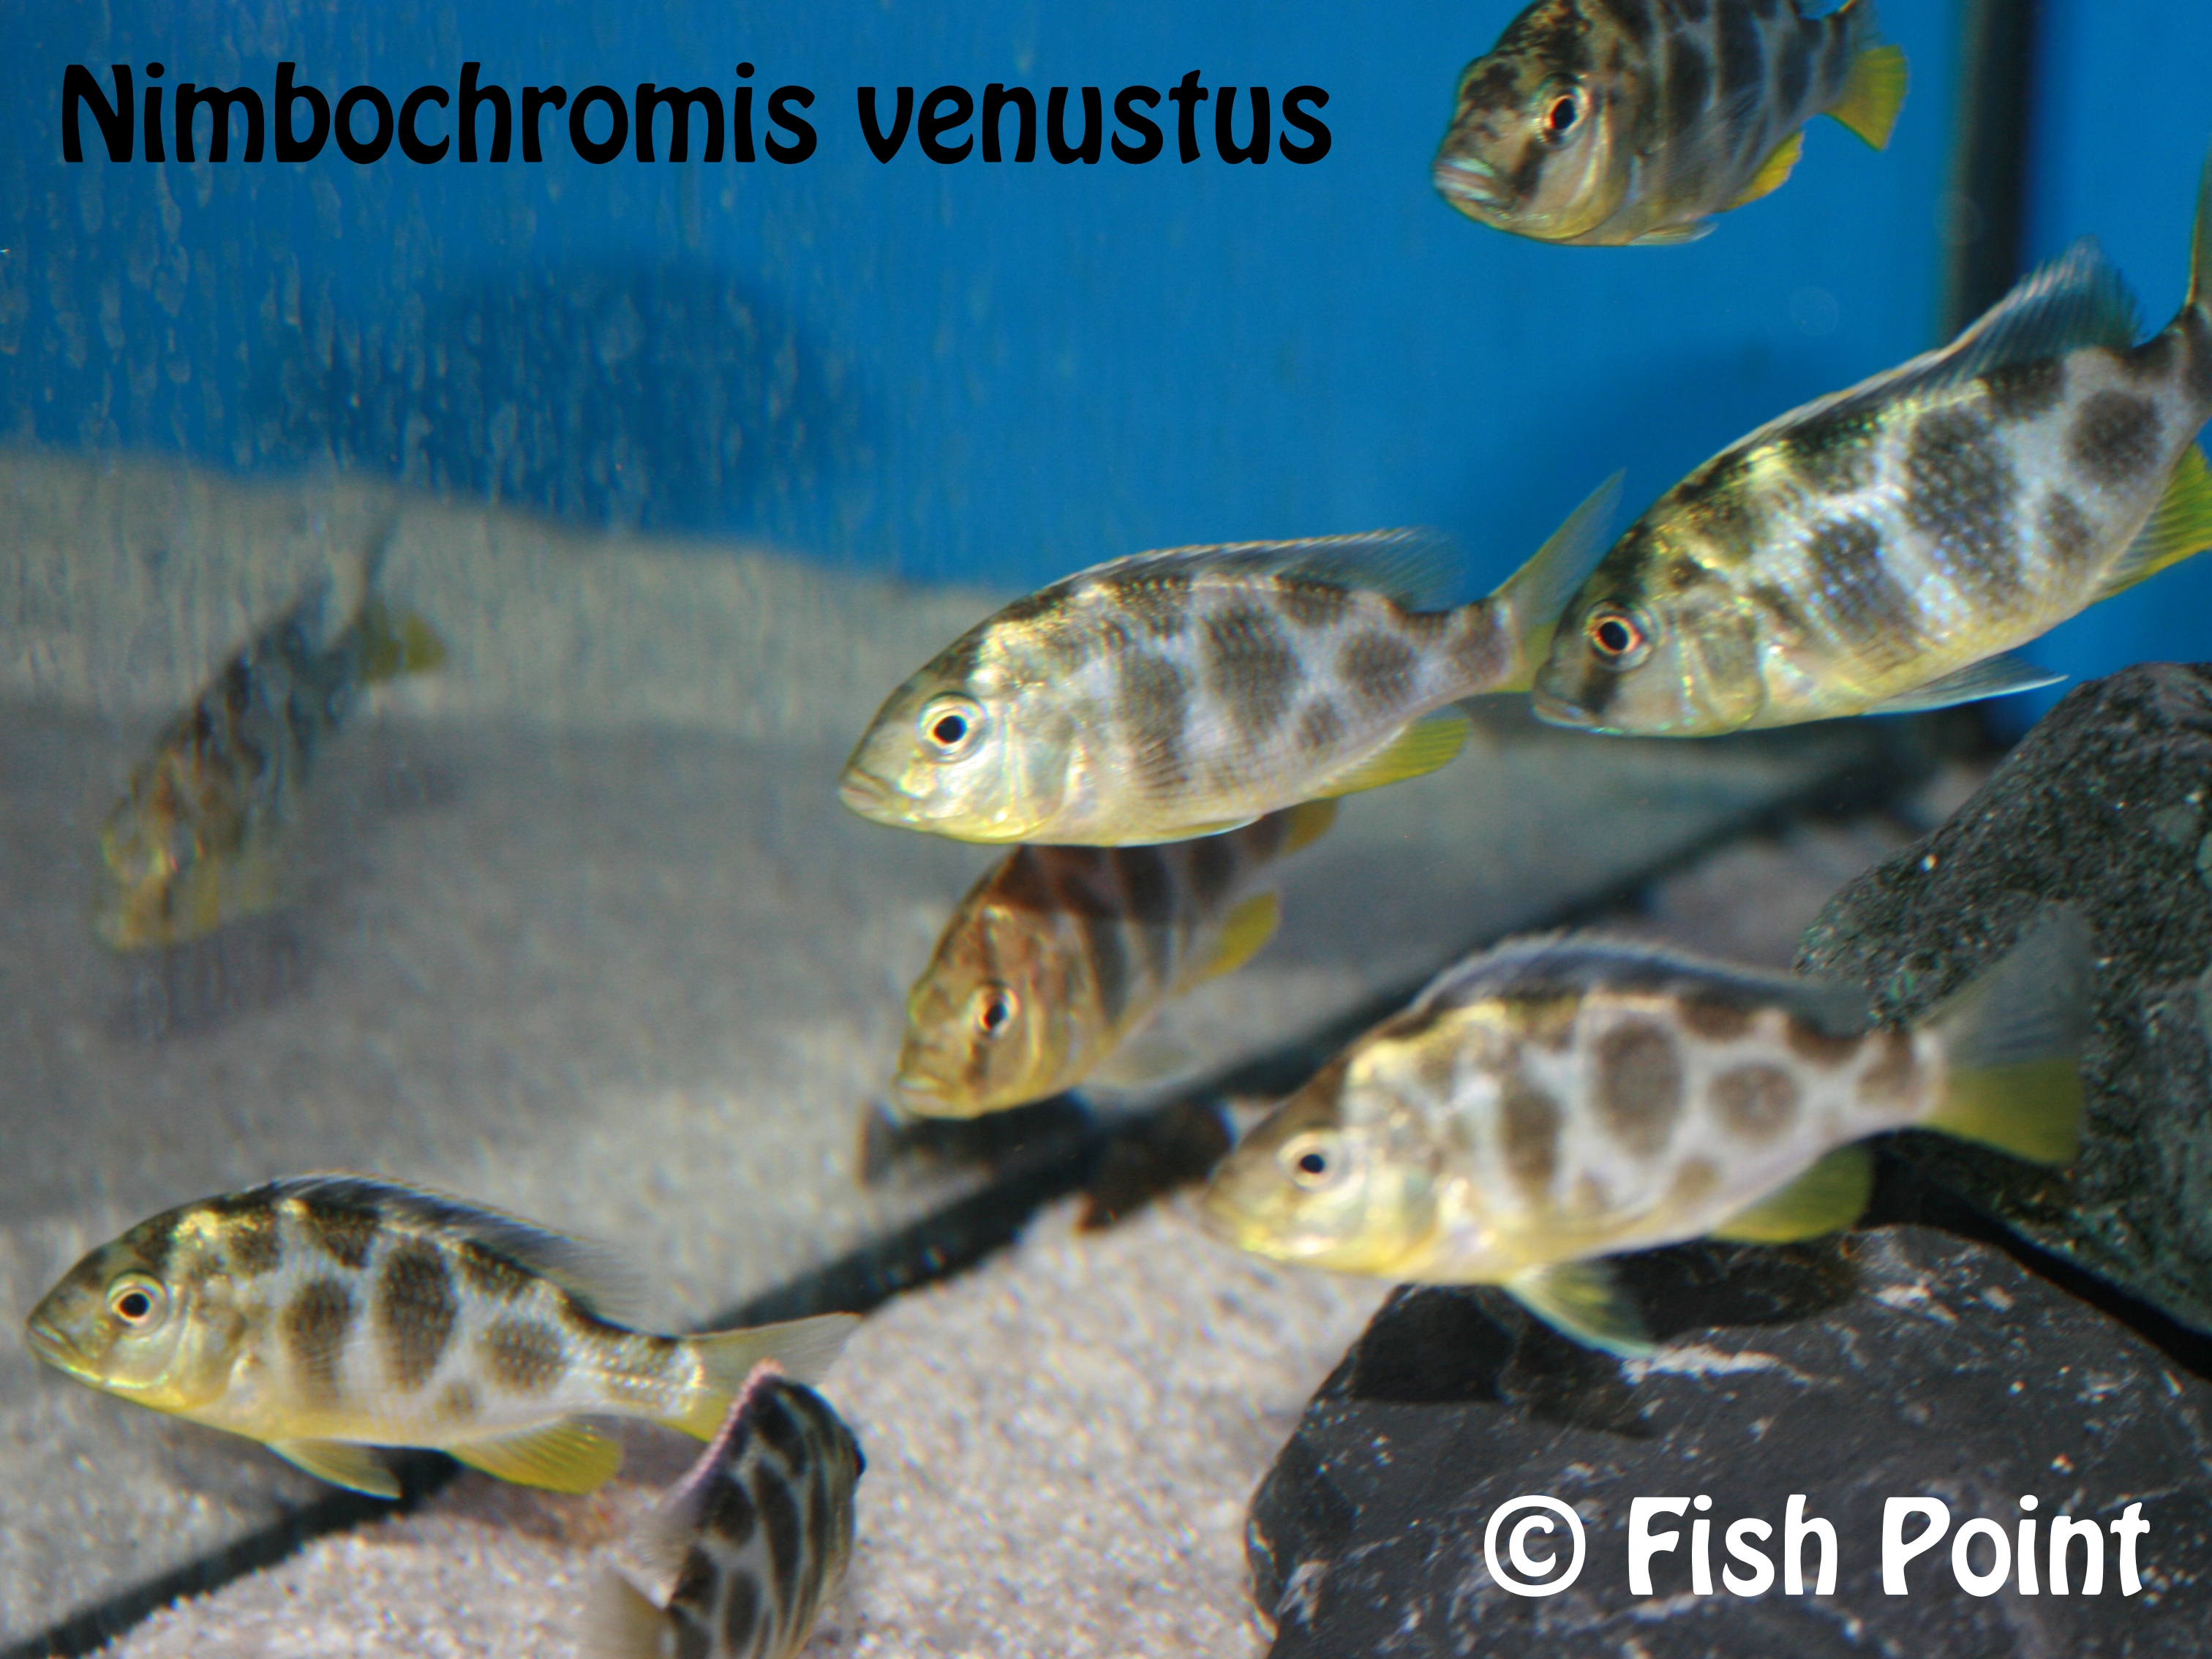 Nimbochromis venustus